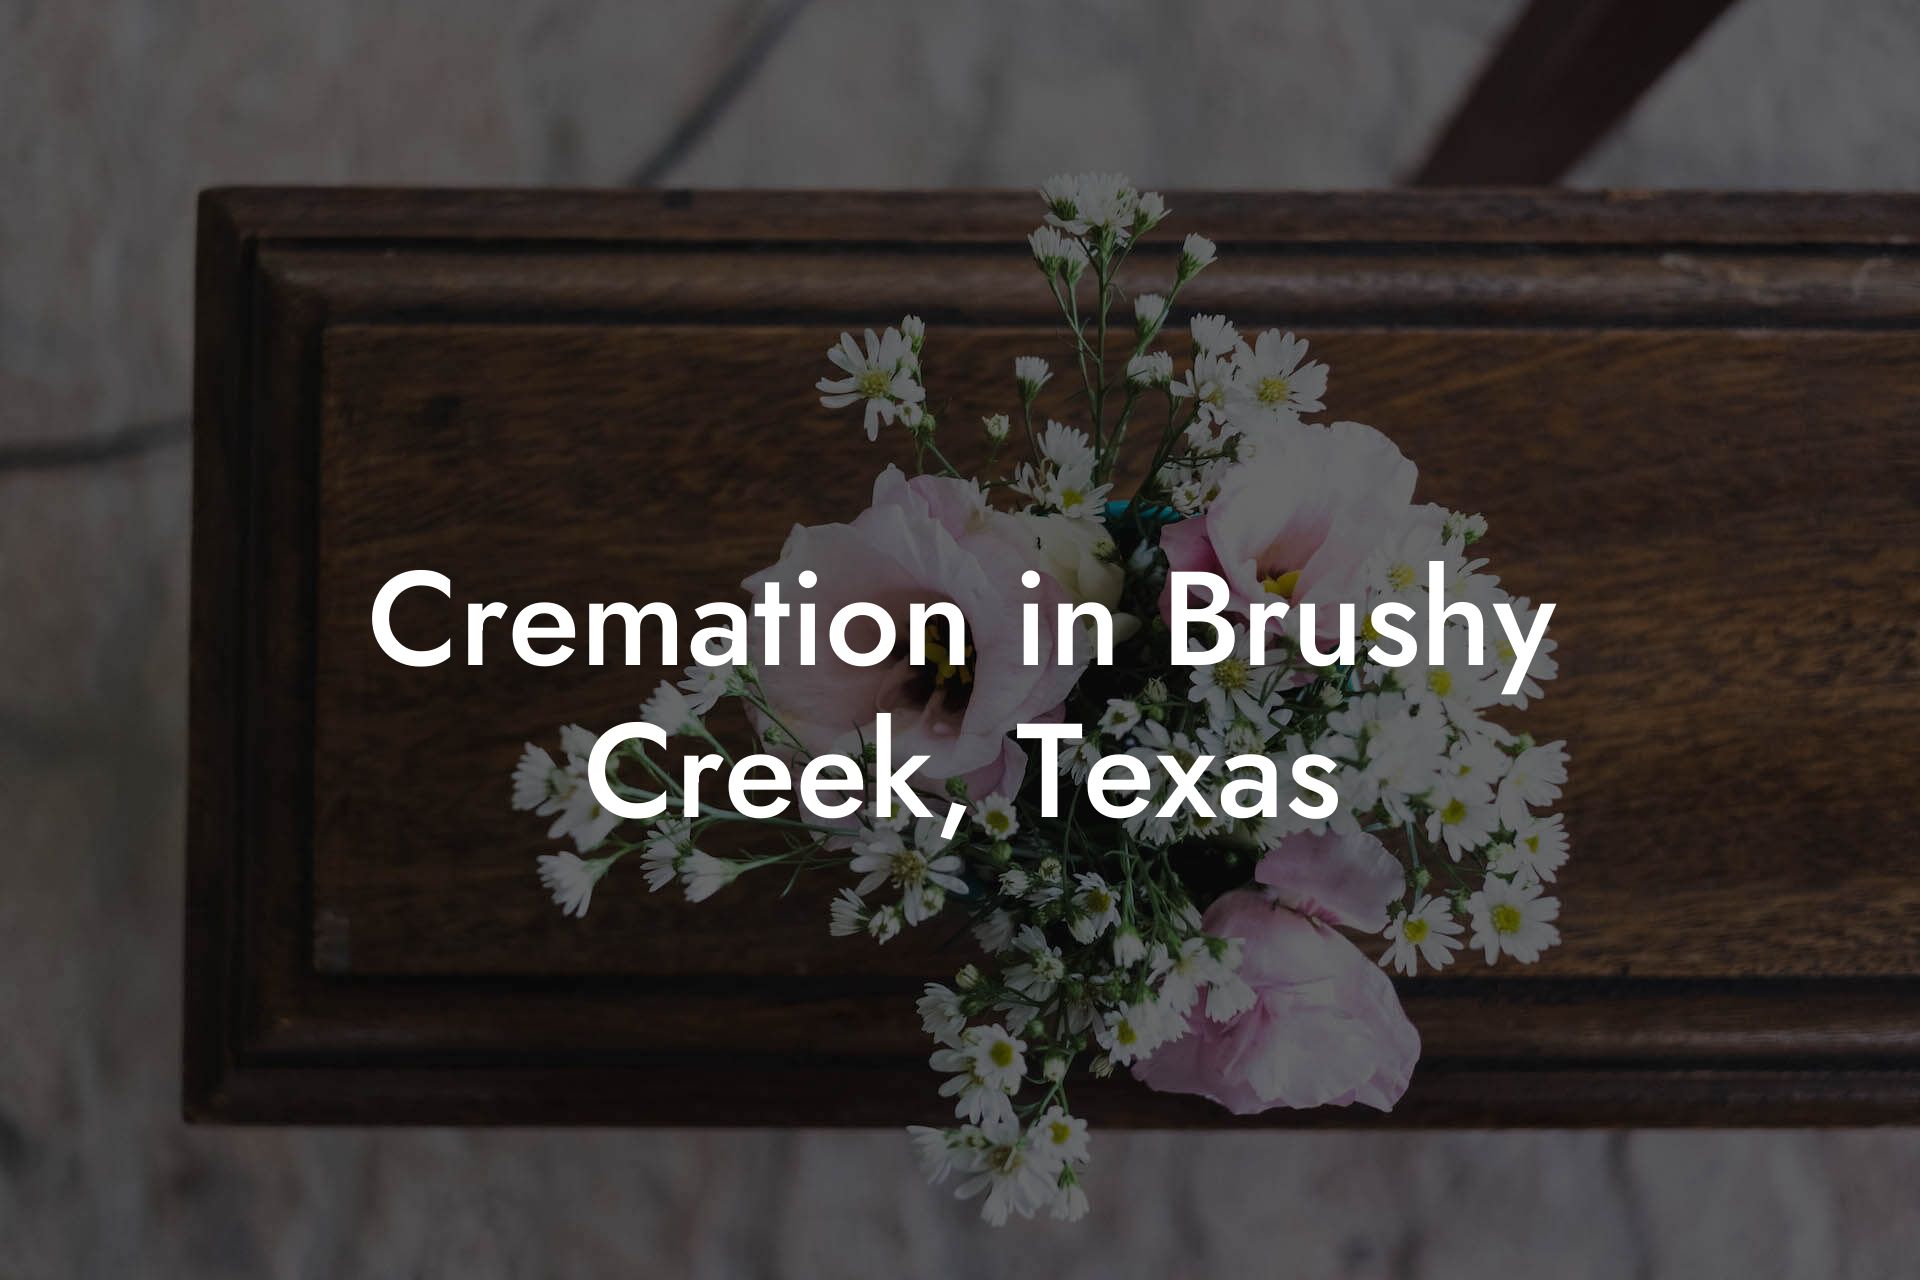 Cremation in Brushy Creek, Texas